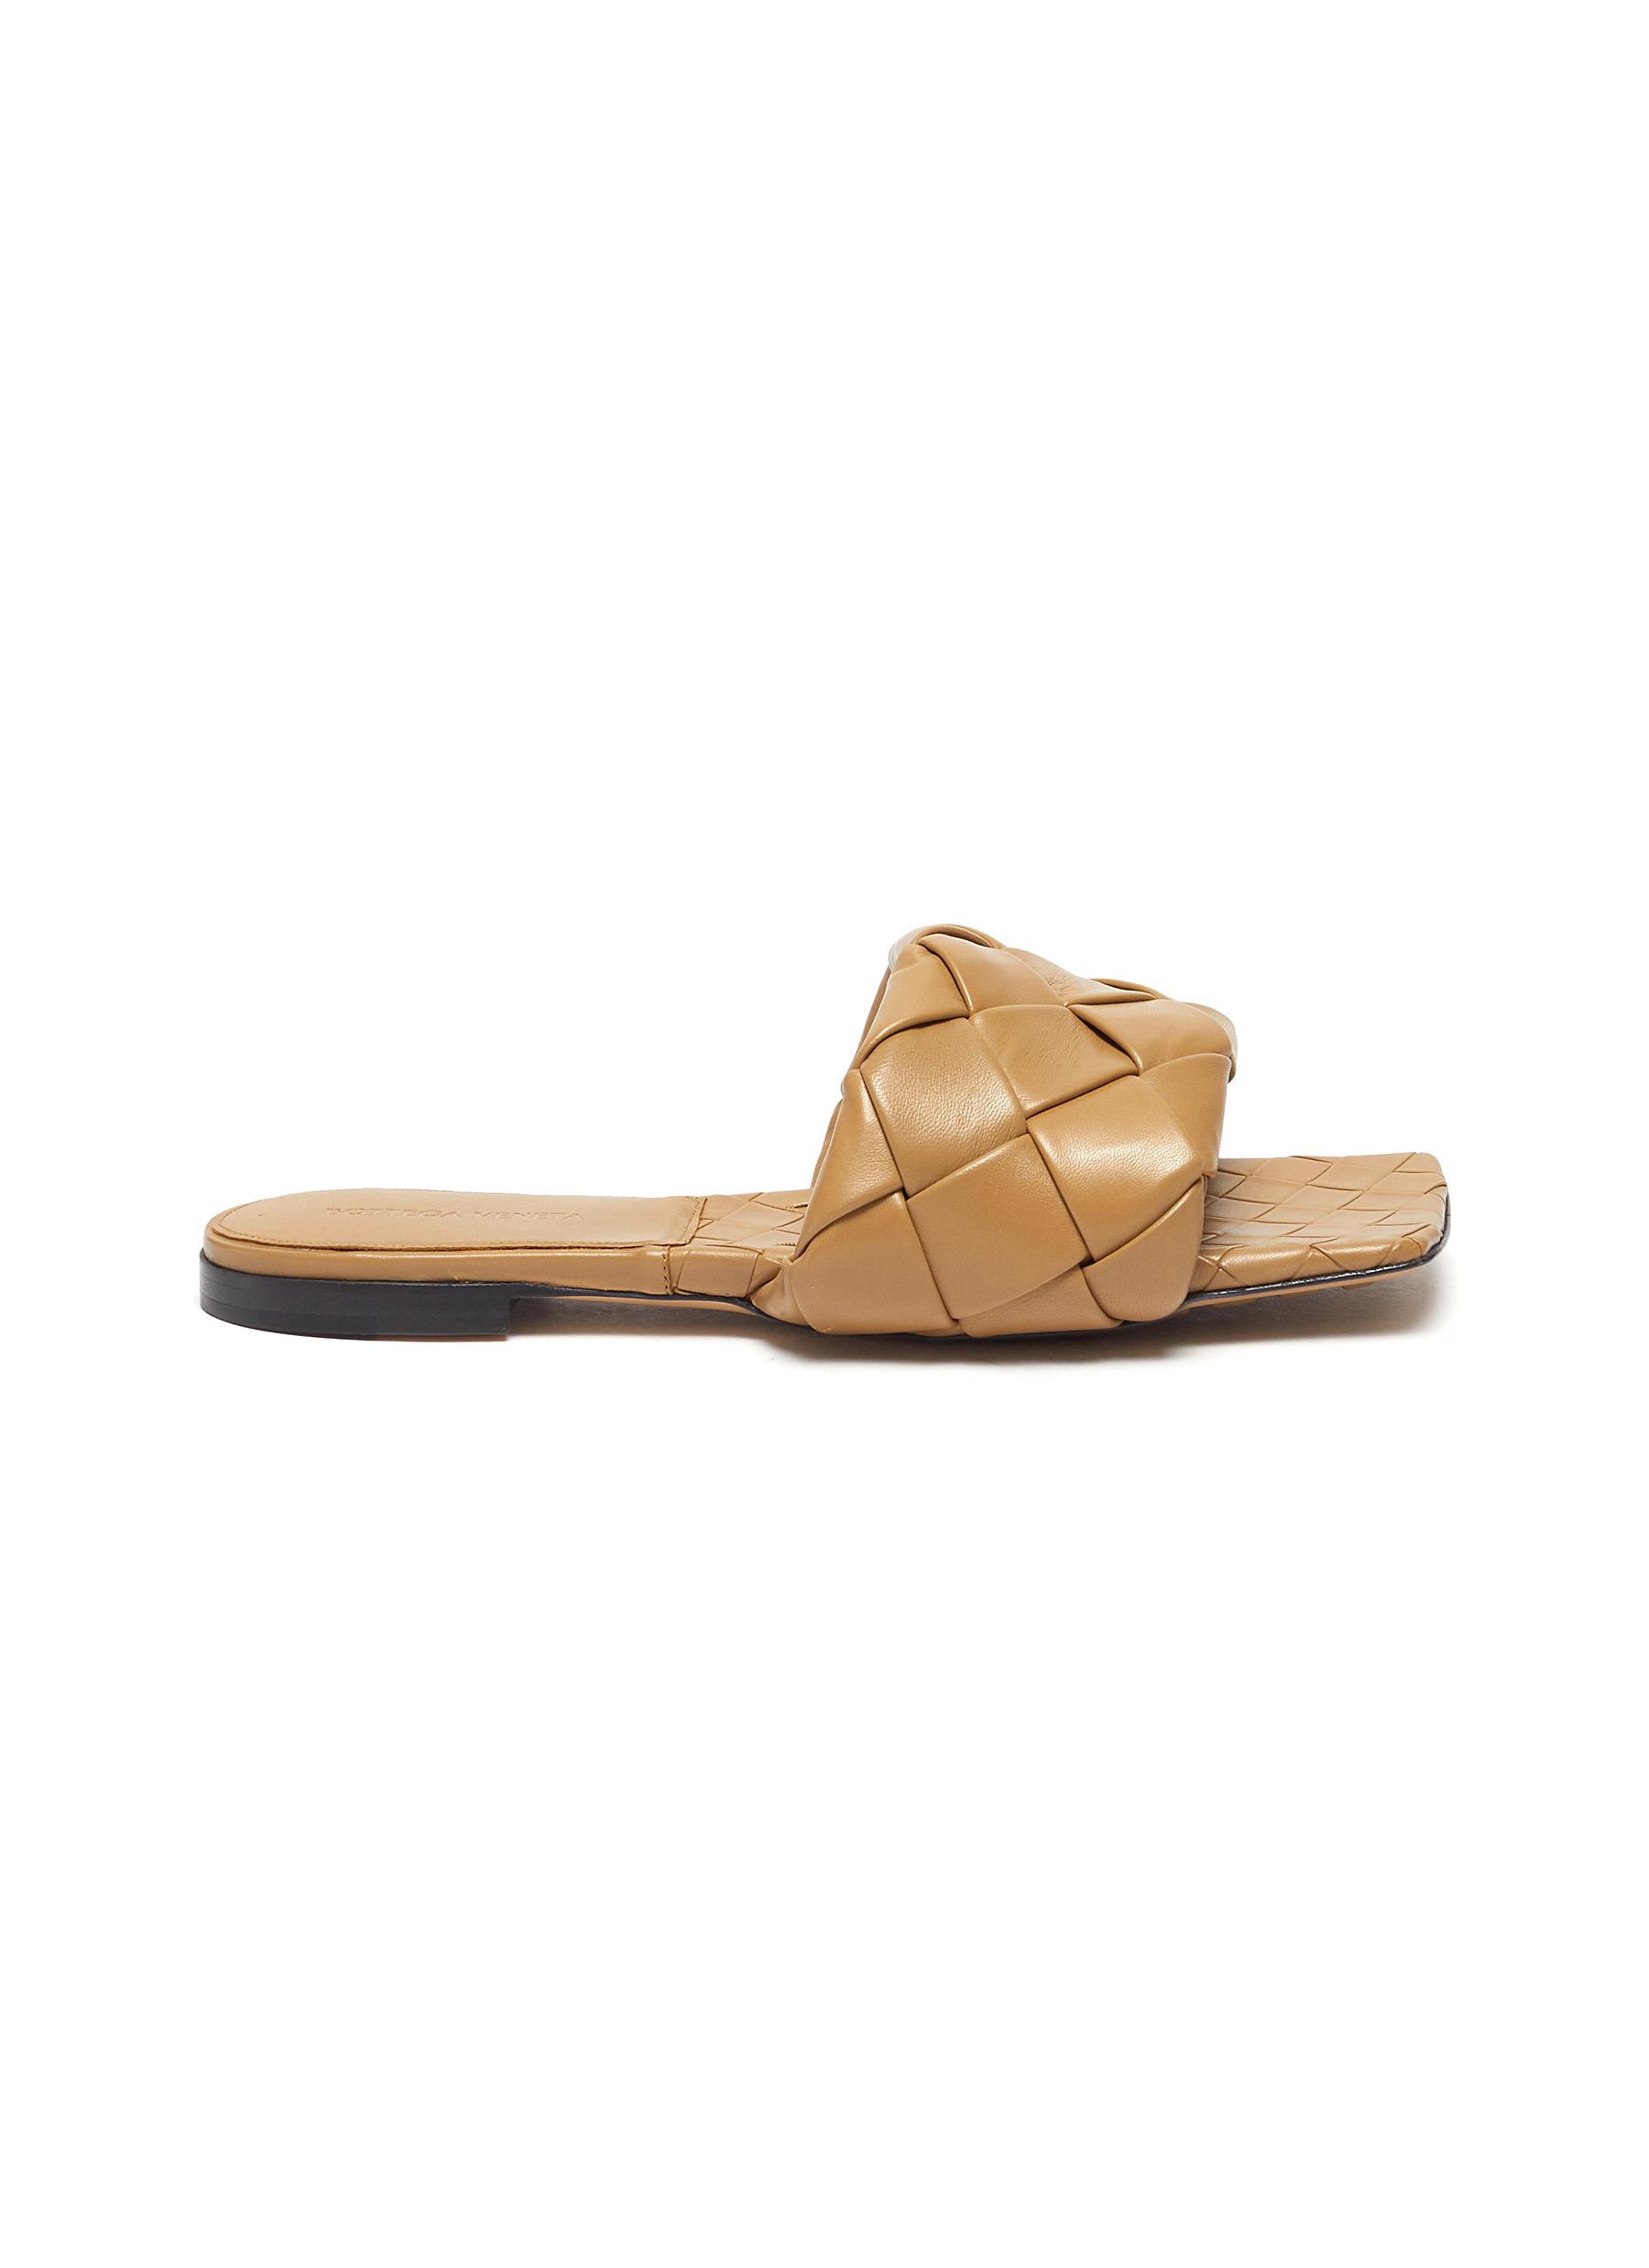 'Lido' intrecciato leather flat sandals